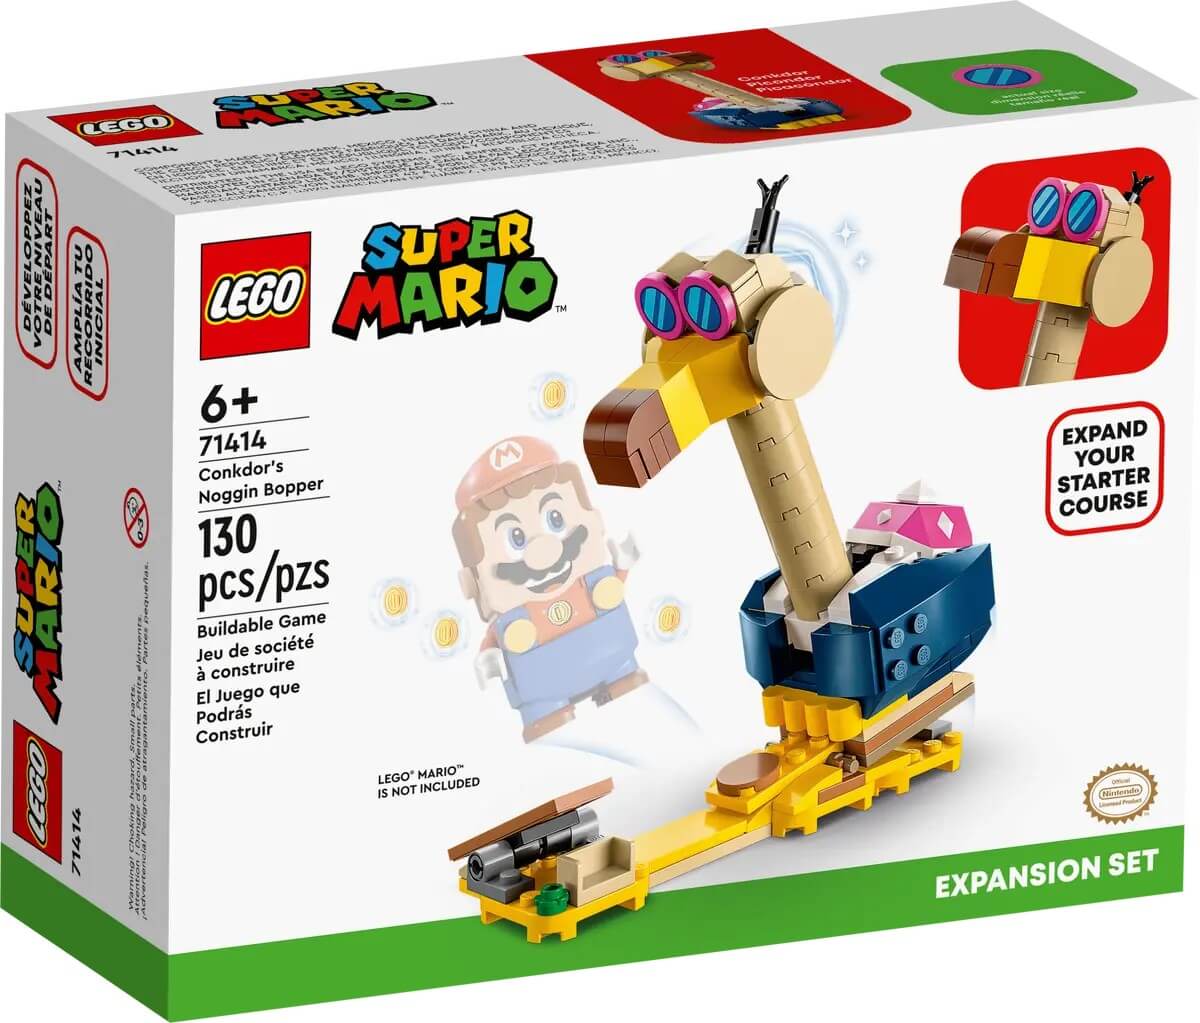 Фигурка-конструктор Lego Super Mario Conkdor's Noggin Bopper Expansion Set 71414, 130 деталей фигурки peach’s castle expansion set